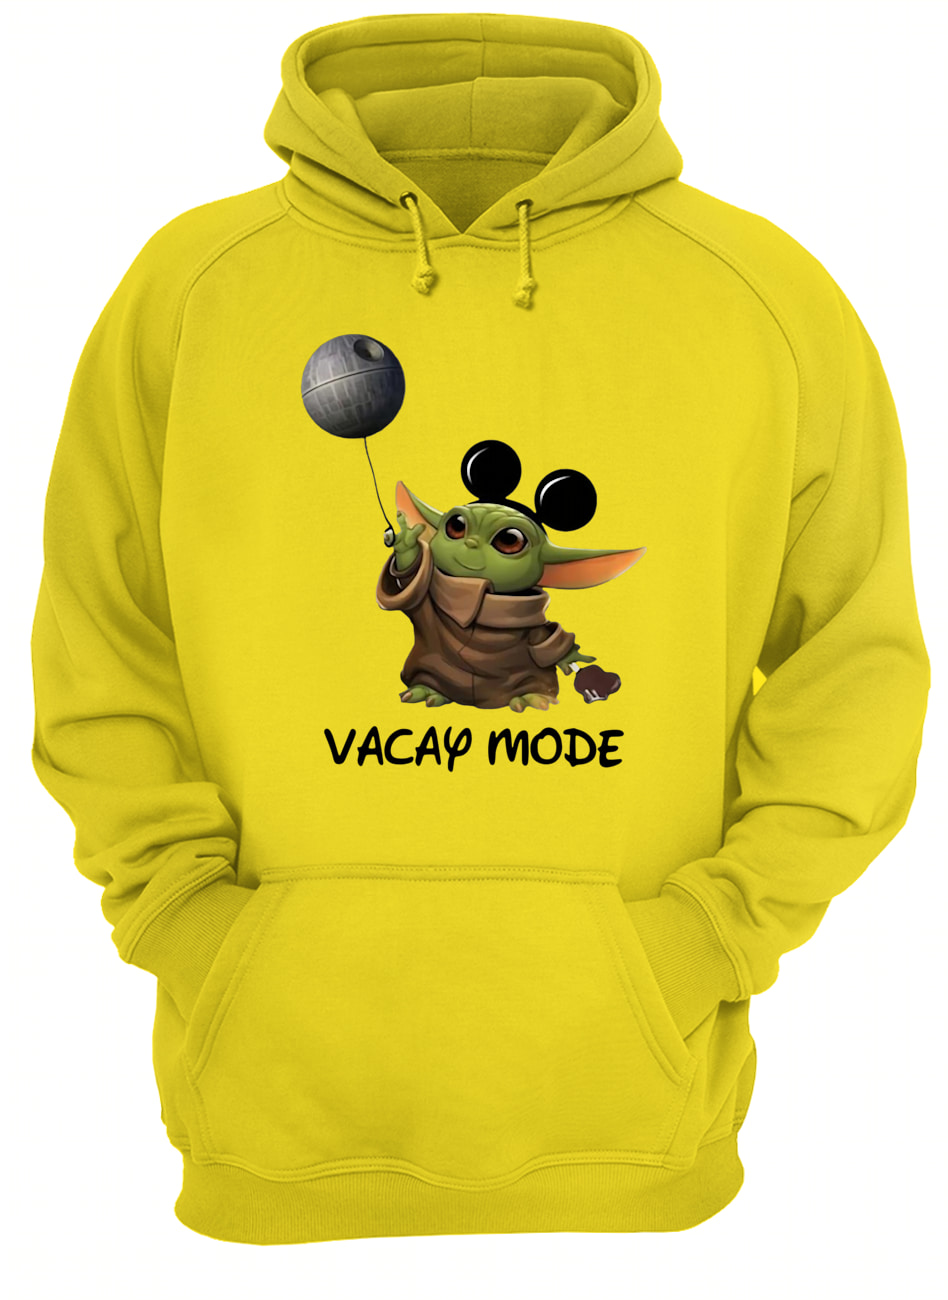 Star wars baby yoda mickey mouse vacay mode hoodie